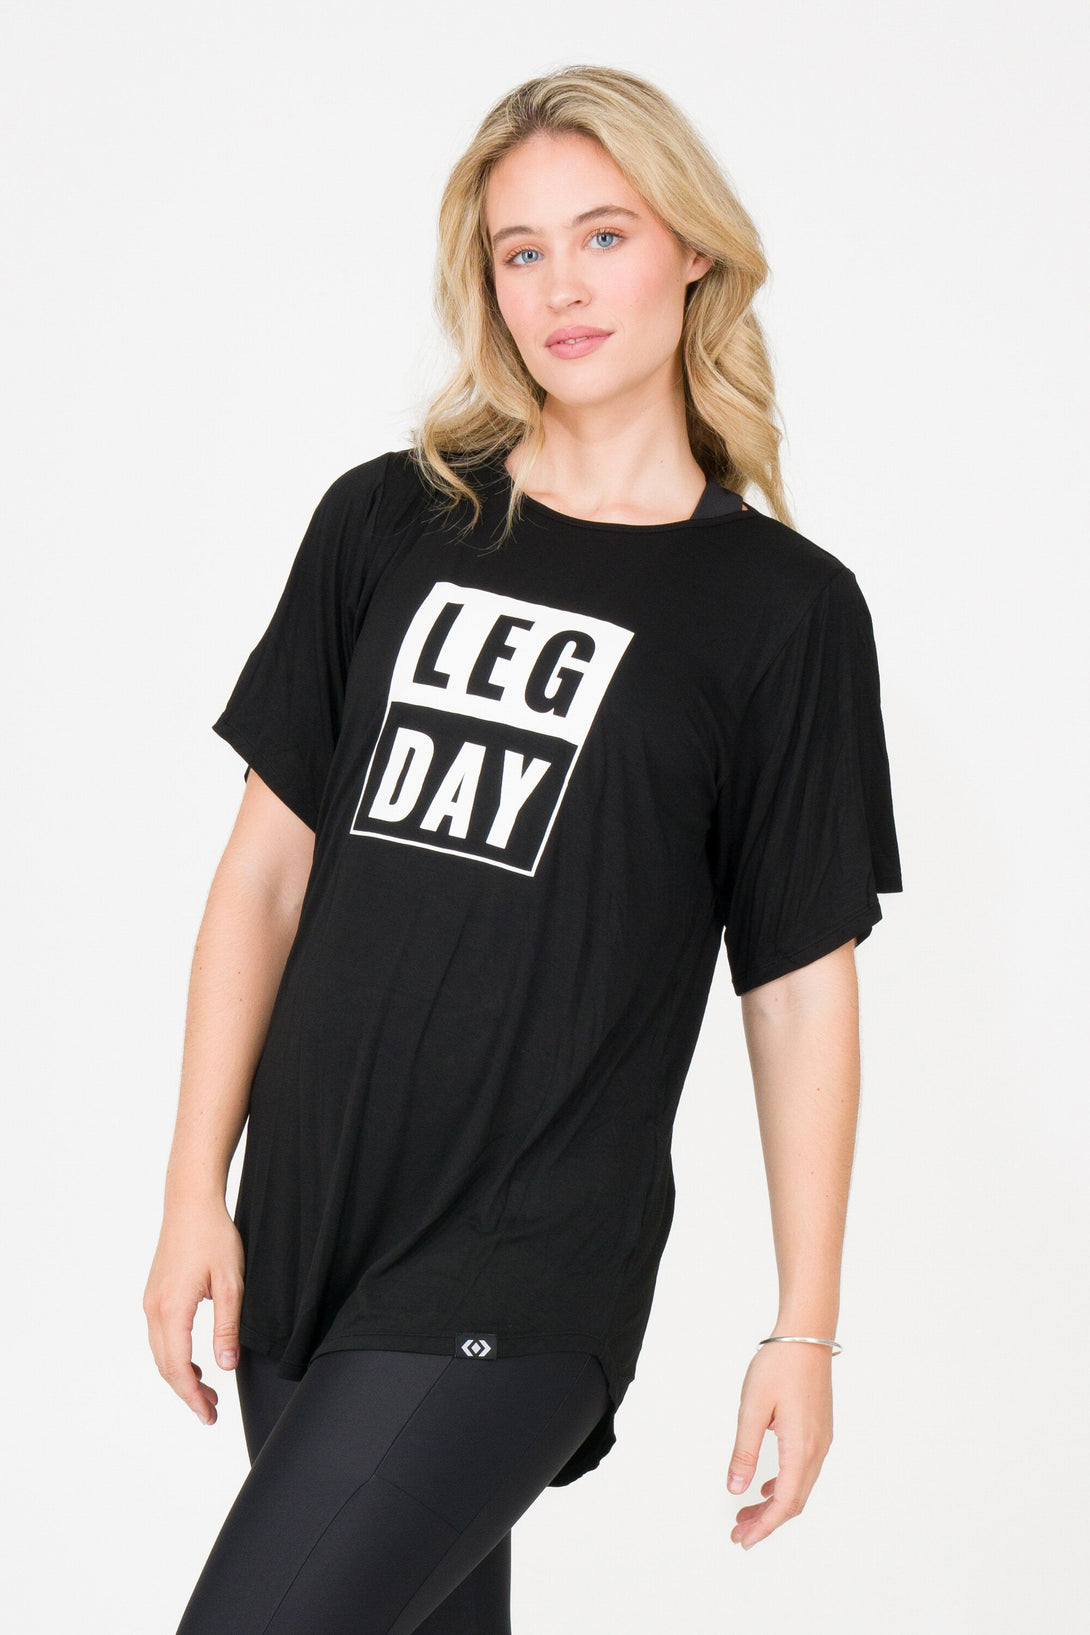 Leg Day Black Slinky To Touch - Plain Boyfriend Tee-Activewear-Exoticathletica